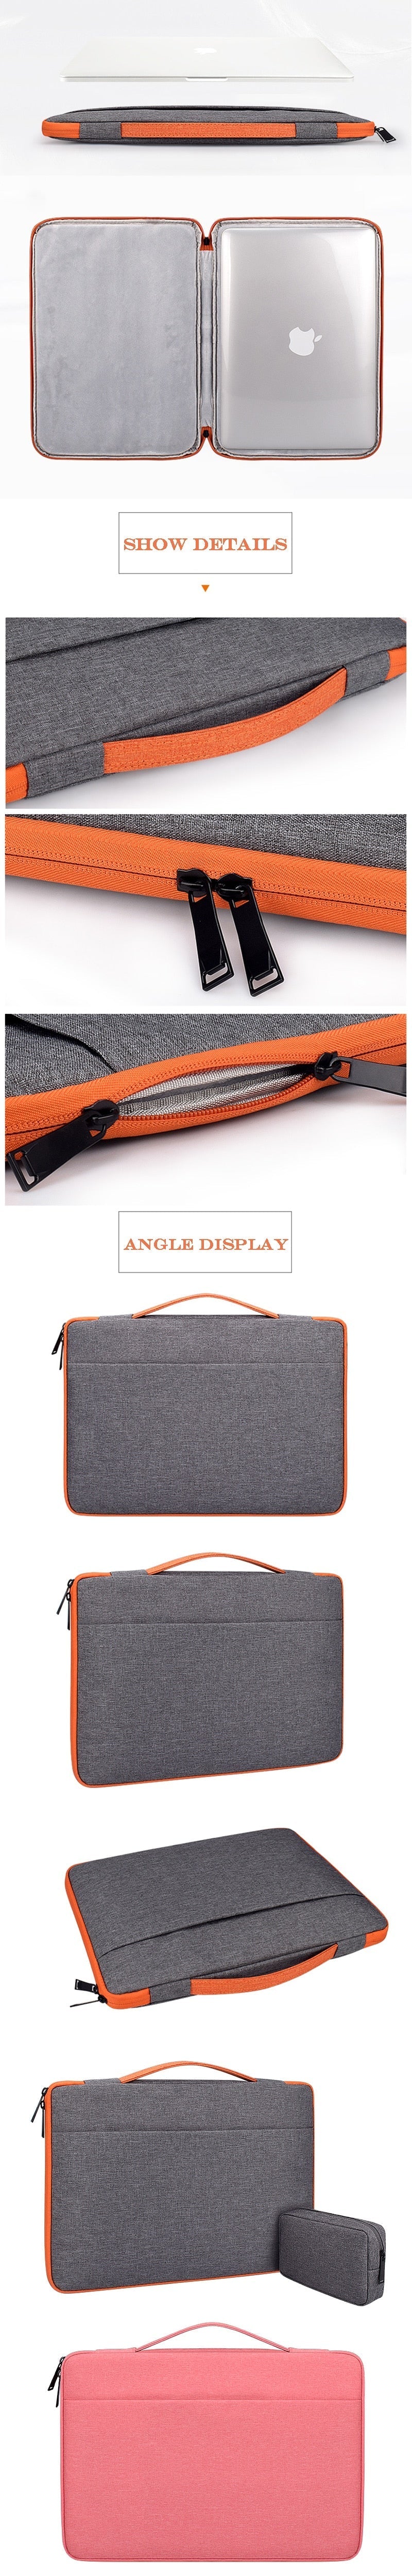 12 inch Versus Laptop Sleeve Bag Set